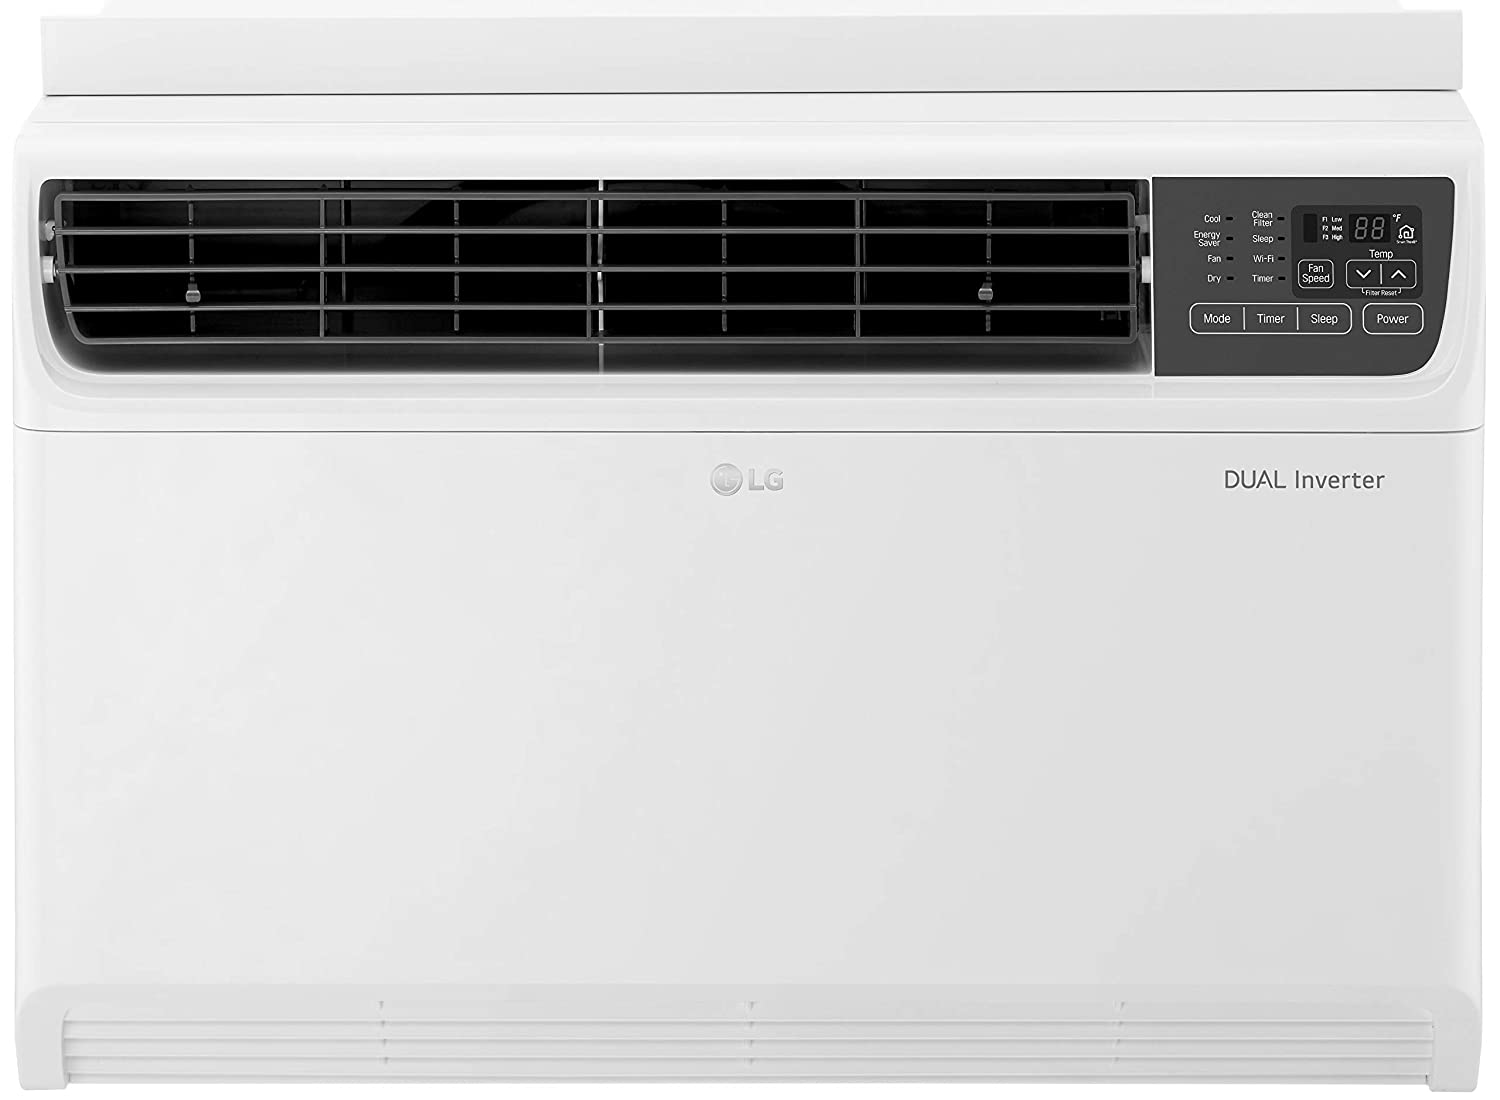 LG 1.5 Ton 5 Star Wi-Fi Inverter Window AC (Copper, 2020 Model, JW-Q18WUZA, White)